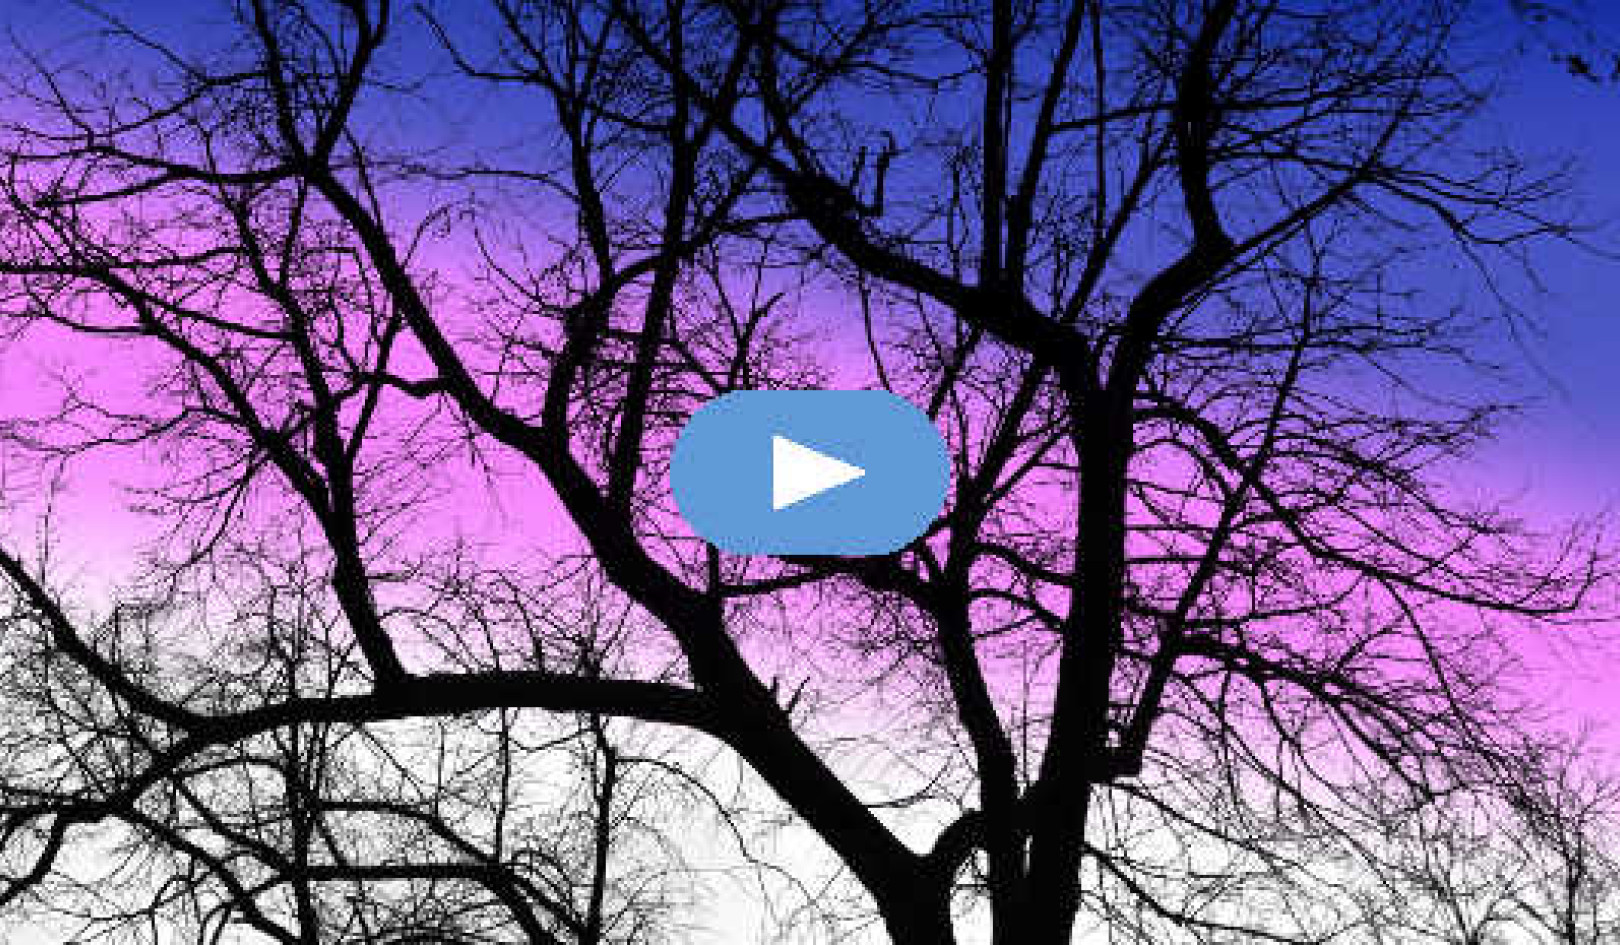 Дерево зимой все еще дерево (видео)